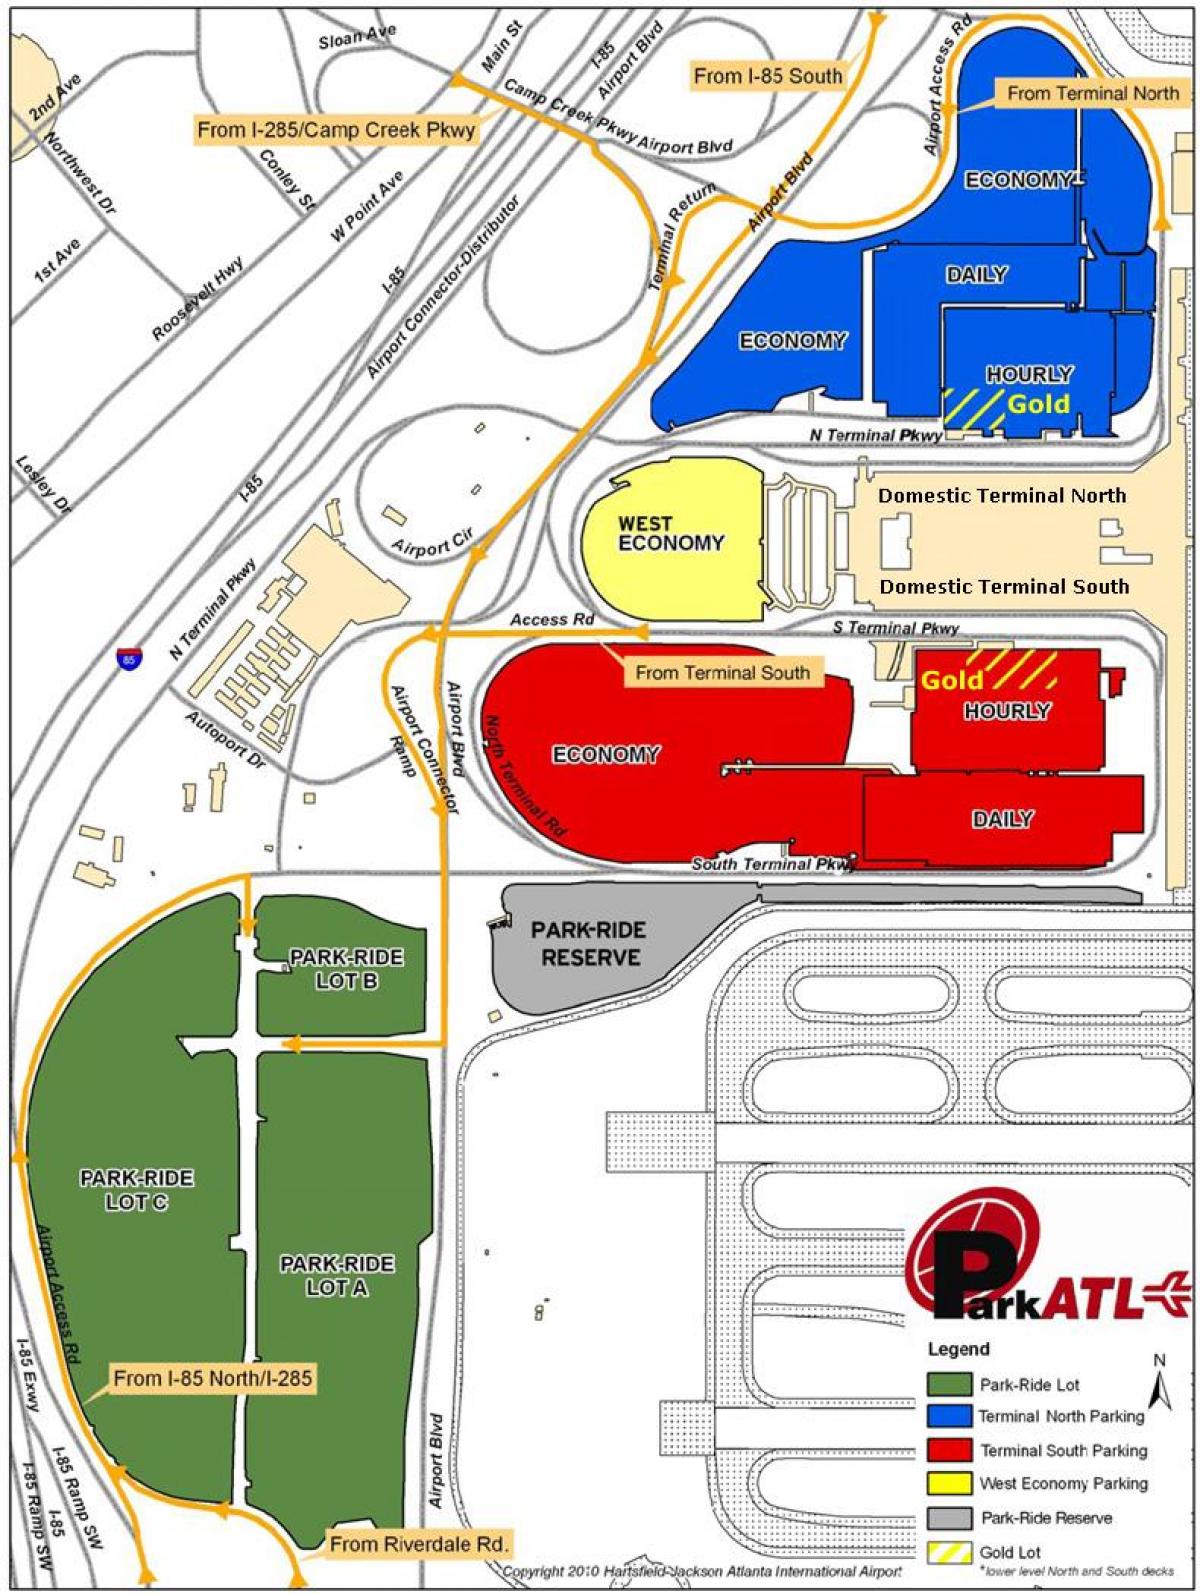 Atlanta Hartsfield aeroportin e parkimit hartë